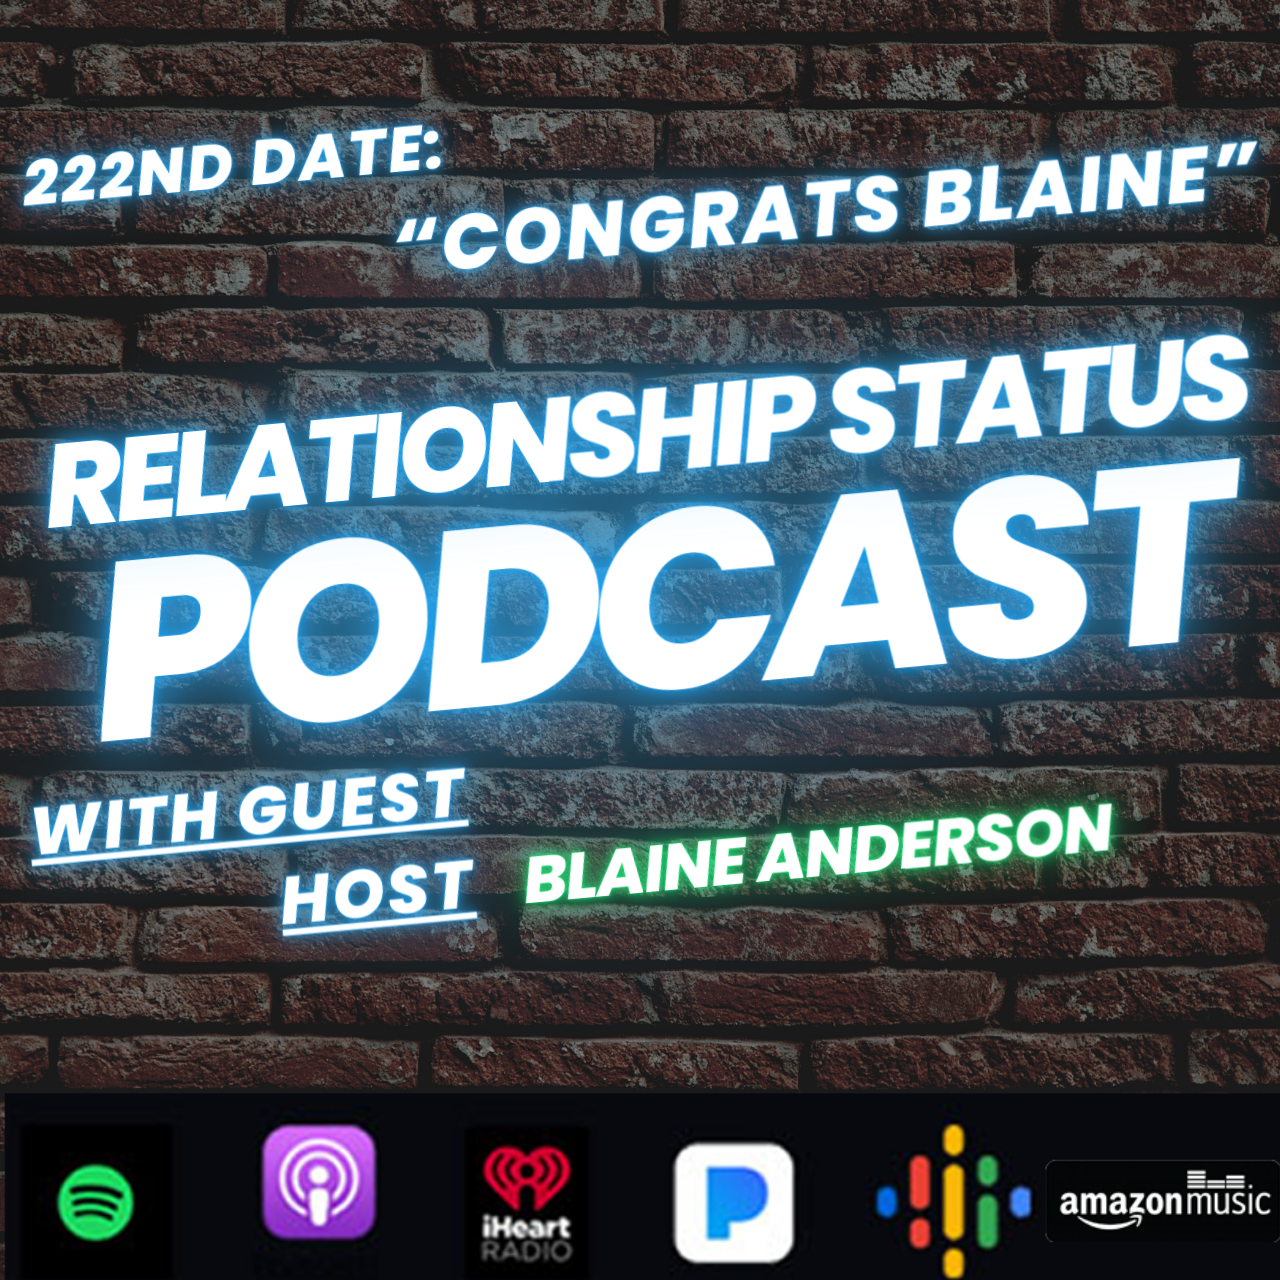 222nd Date Congrats Blaine!